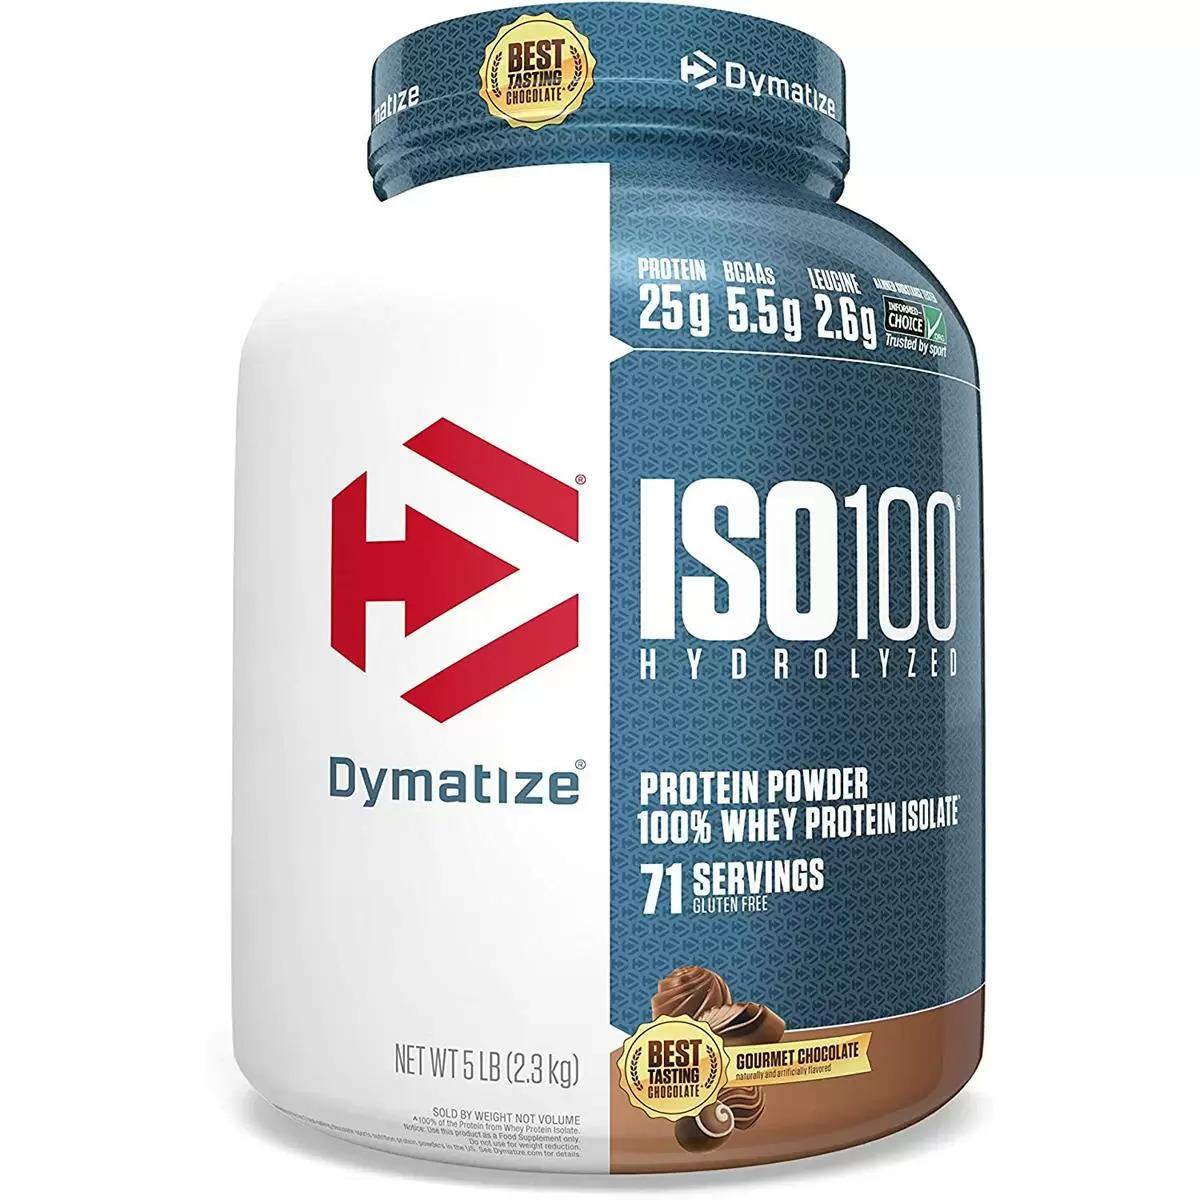 Dymatize ISO100 Hydrolyzed Protein Powder 5lbs for $41.99 Shipped